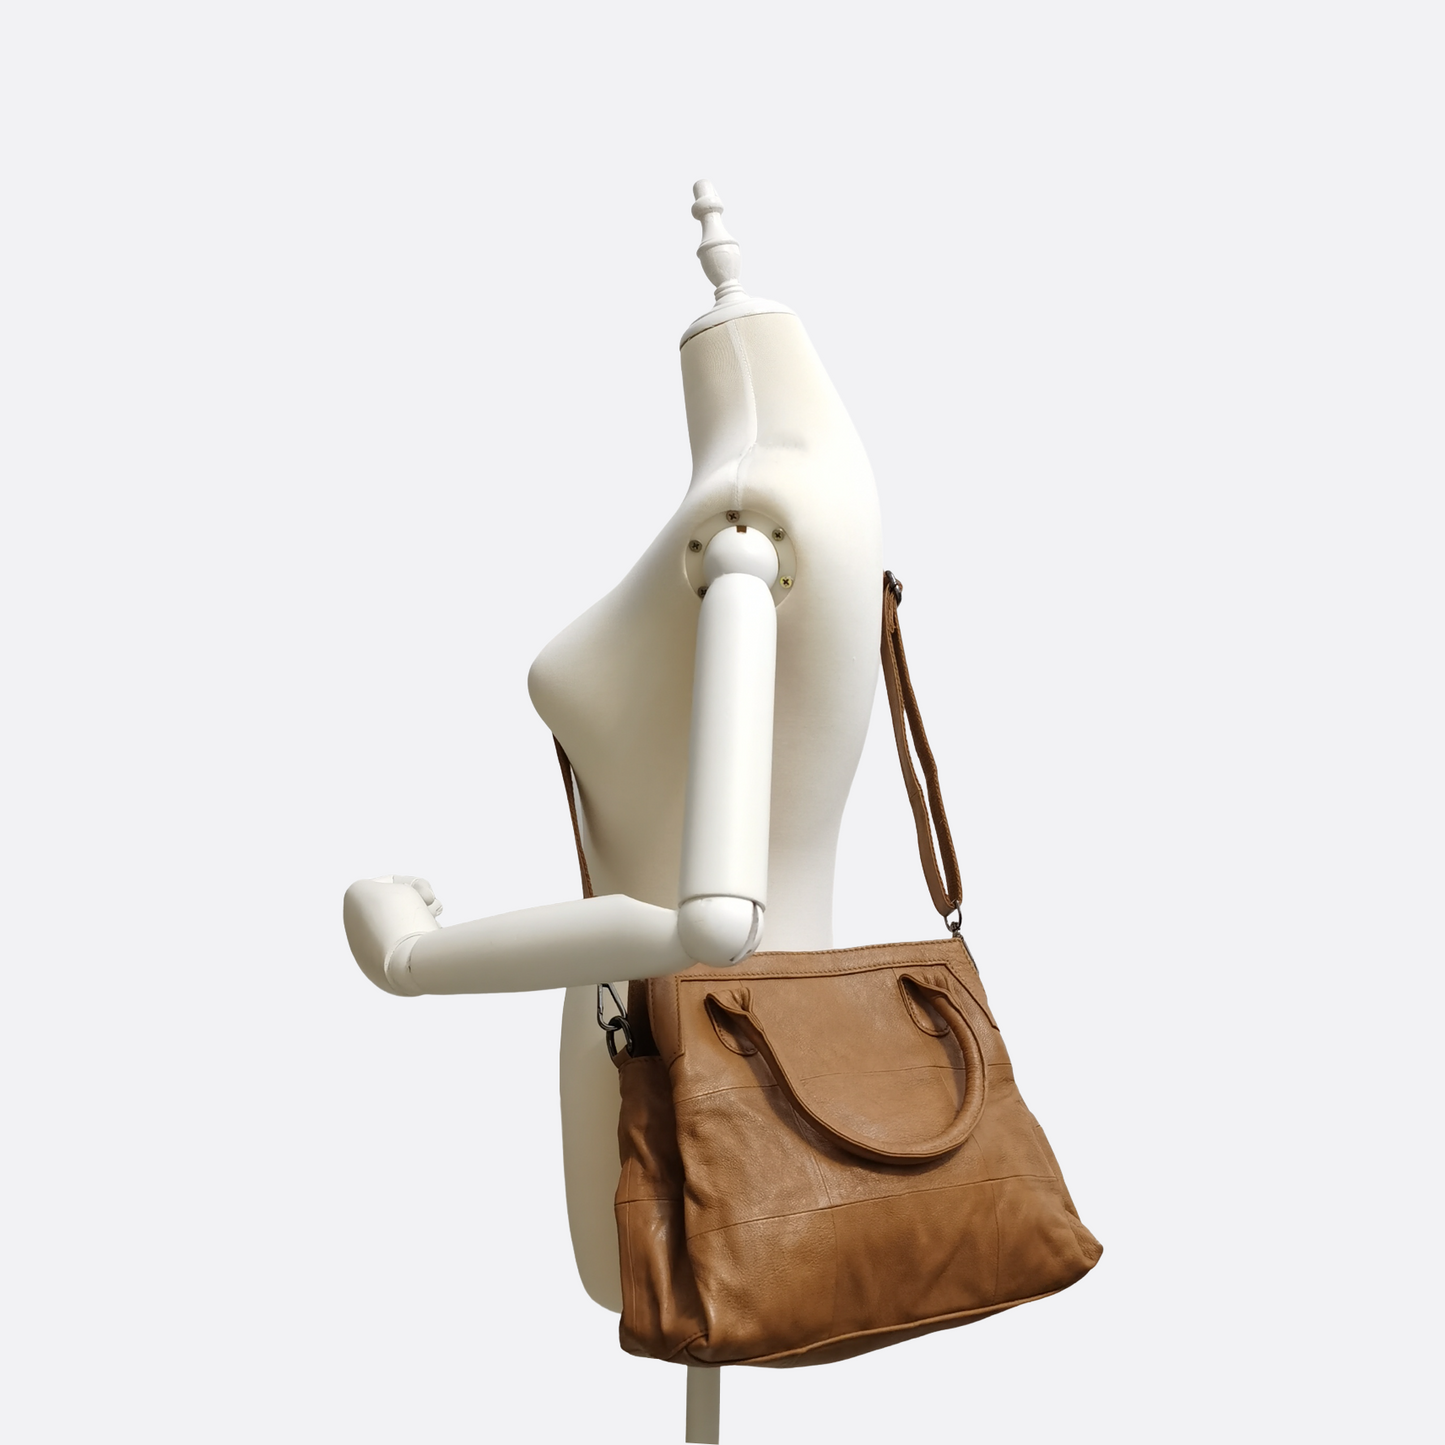 Women's genuine cowhide leather handbag Ingrid V2 design